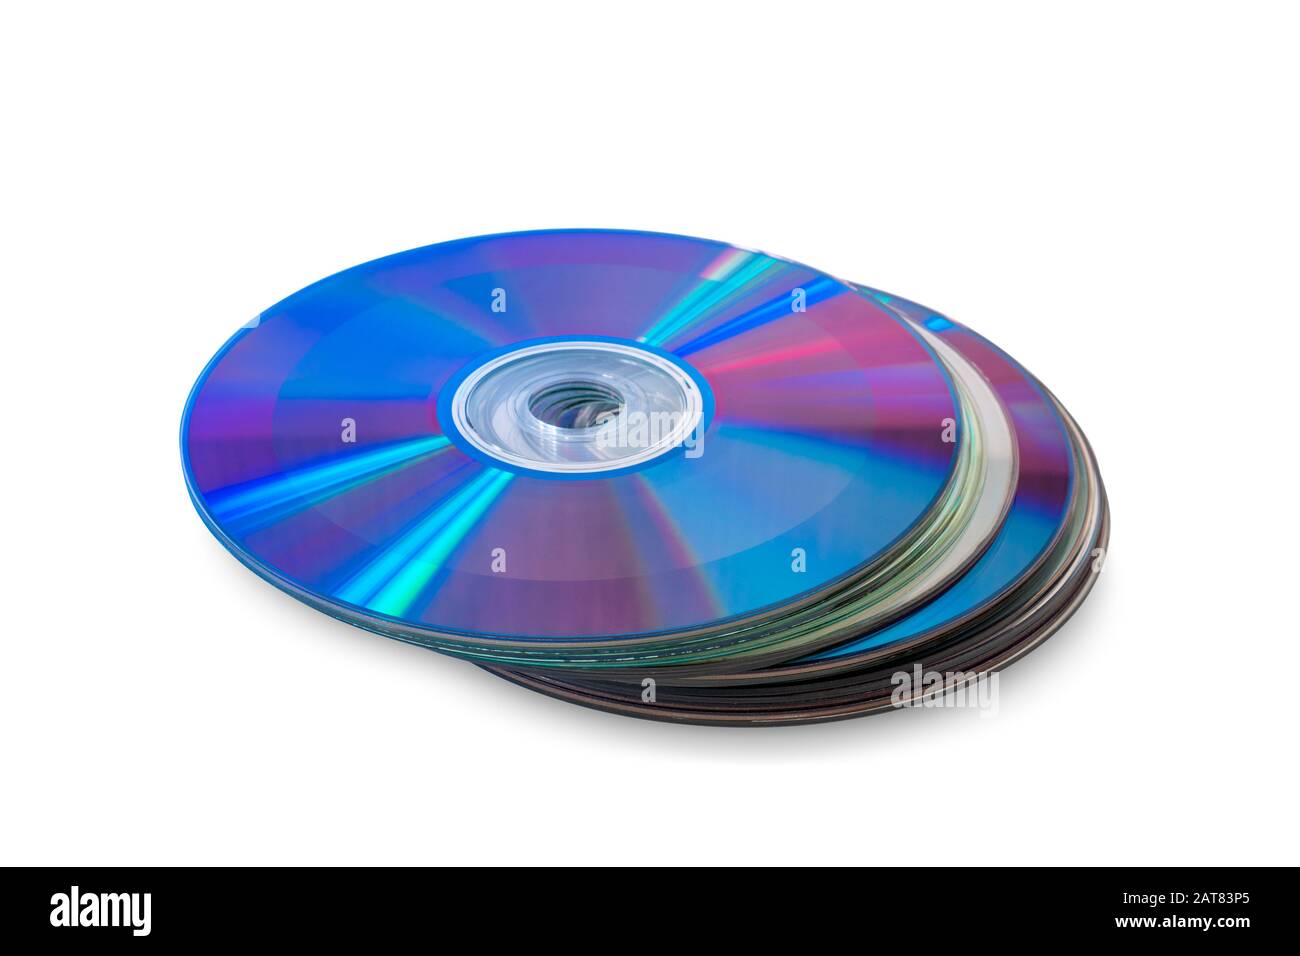 Stack of cd roms. CD & DVD disk on white background Stock Photo